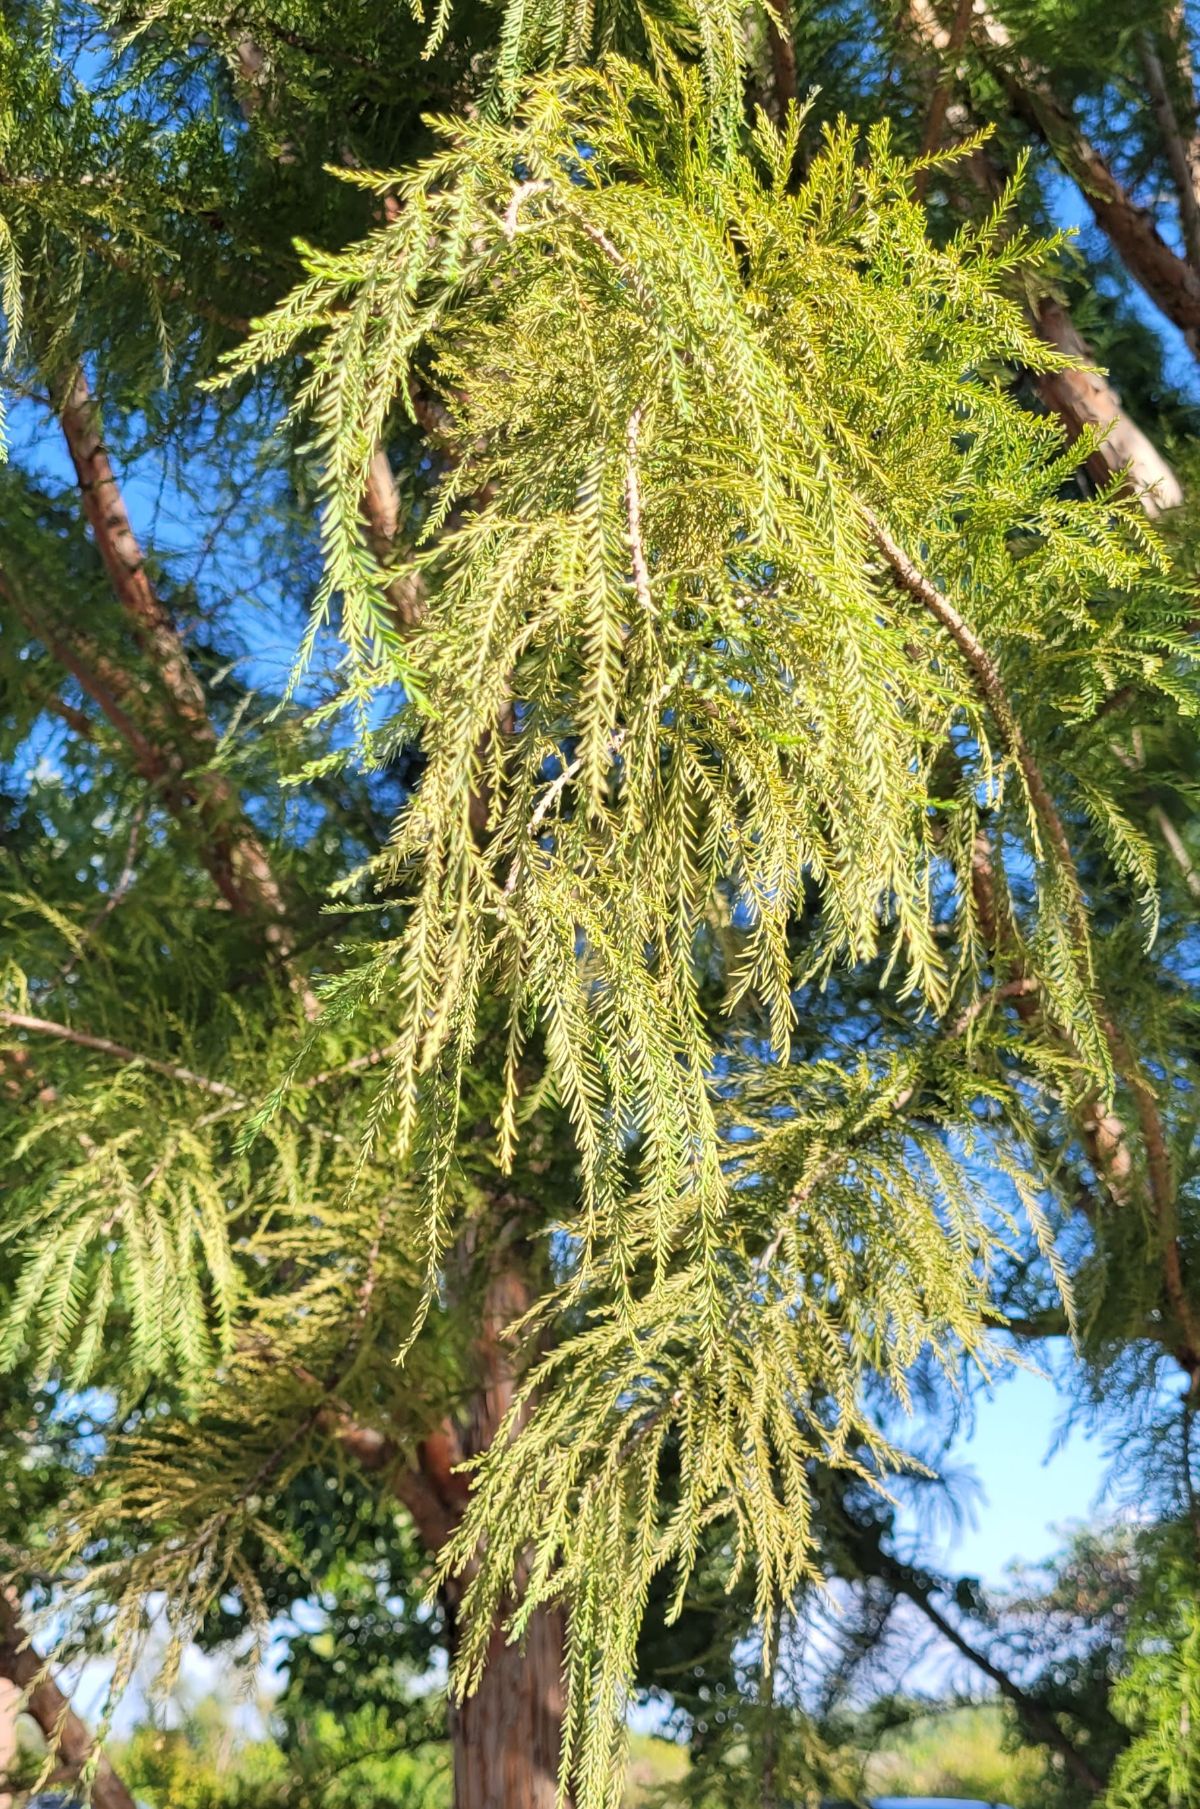 Hanging fern-like leaves on bald cypress